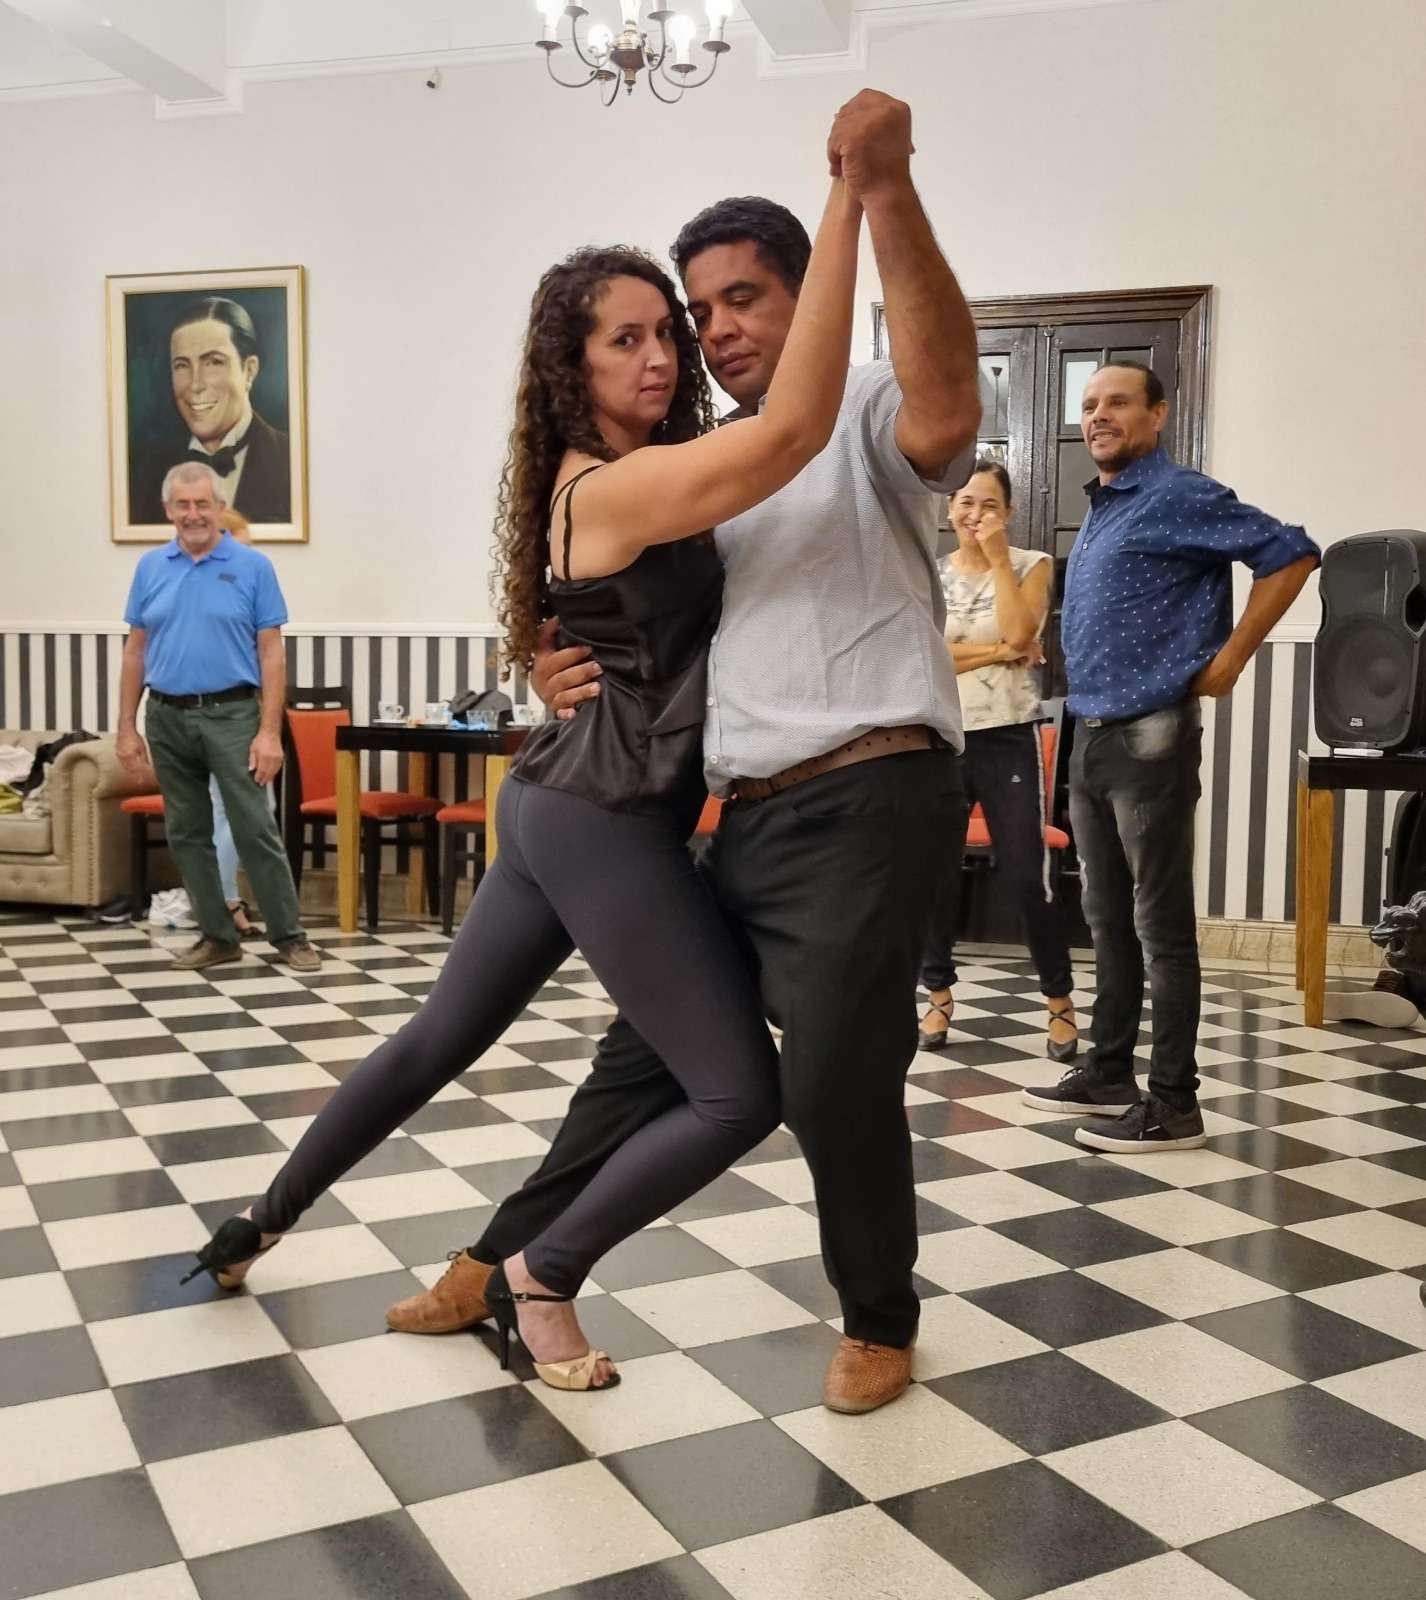 bailar tango hace bien